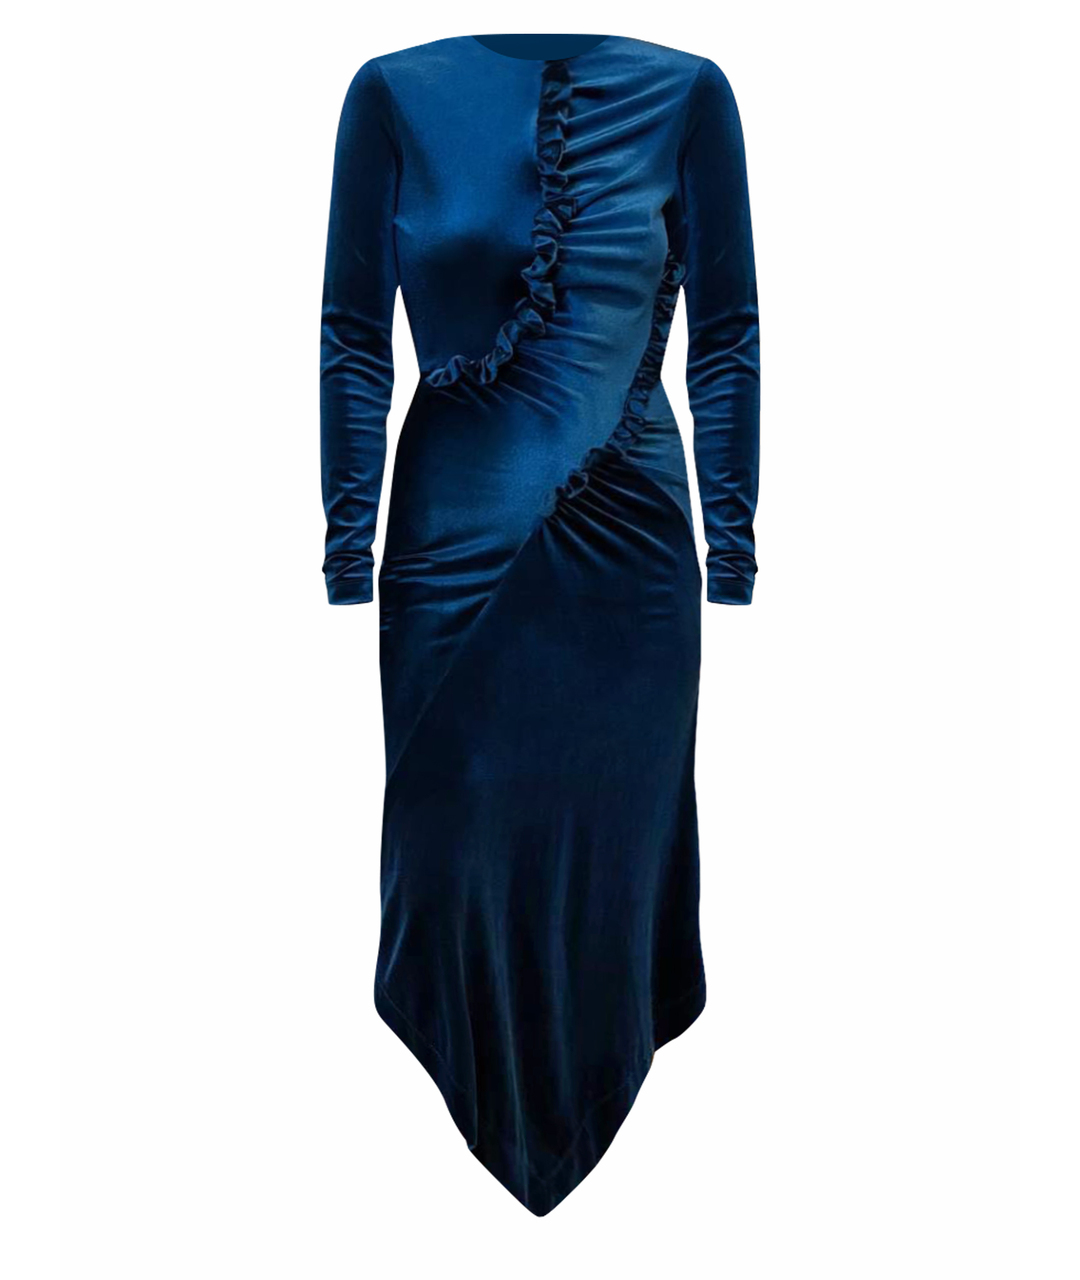 PREEN BY THORNTON BREGAZZI Темно-синее полиэстеровое повседневное платье, фото 1